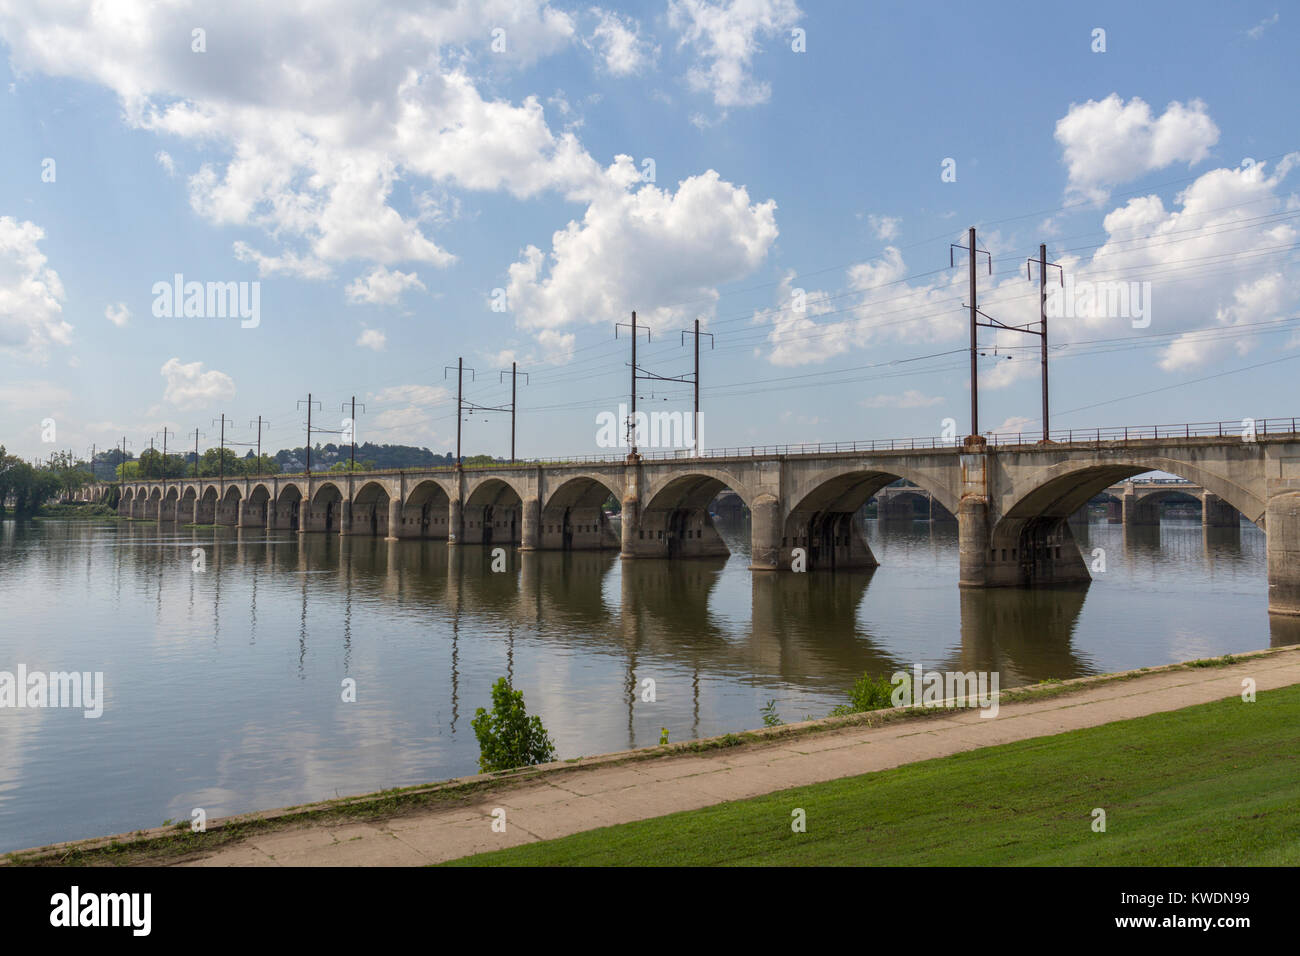 The Philadelphia & Reading Railroad Bridge over the Susquehanna River in Harrisburg, Pennsylvania, United States. Stock Photo